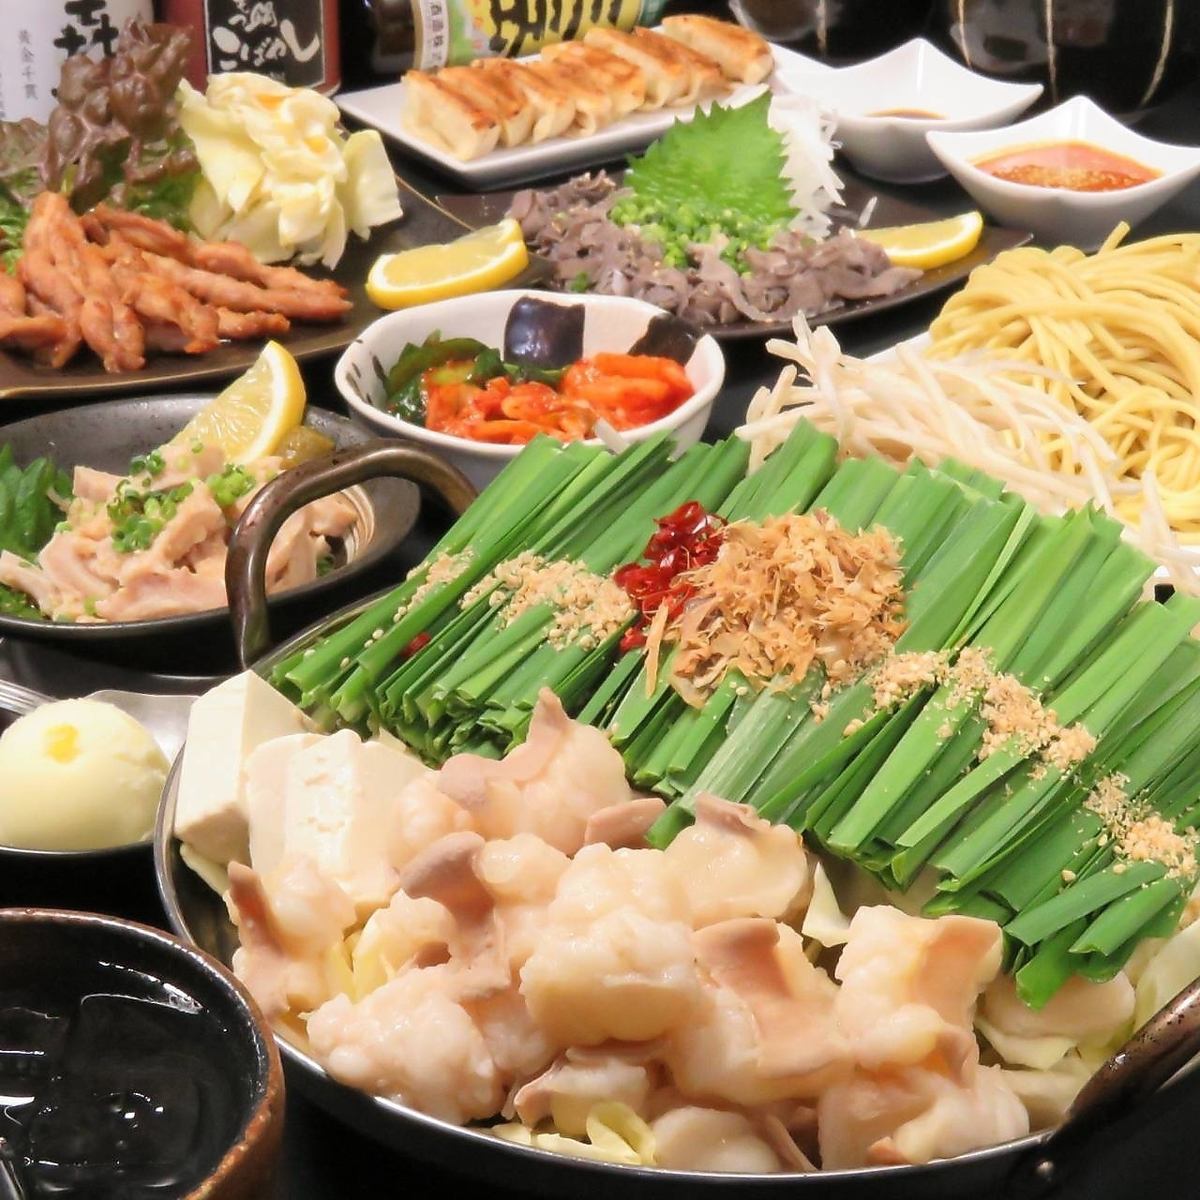 jjigae牛杂火锅、牛杂芝士烧烤等必点菜品深受女性欢迎。